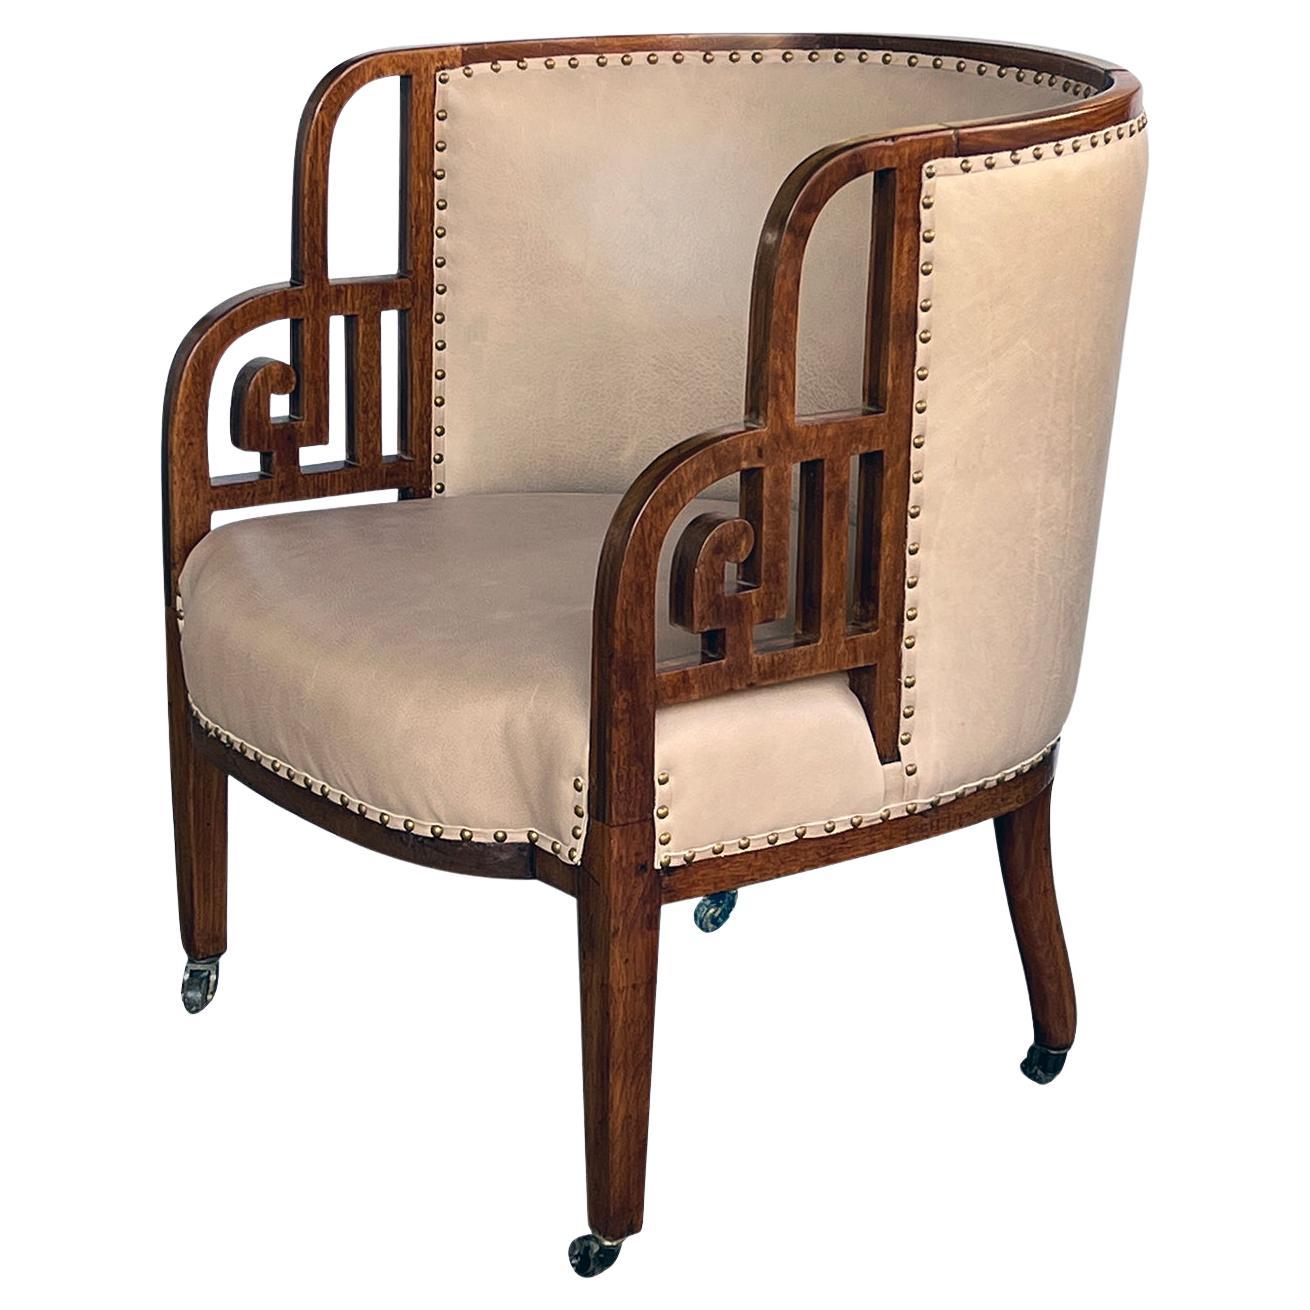 Rare English Art Deco Barrel-Back Chair in the Asian Taste